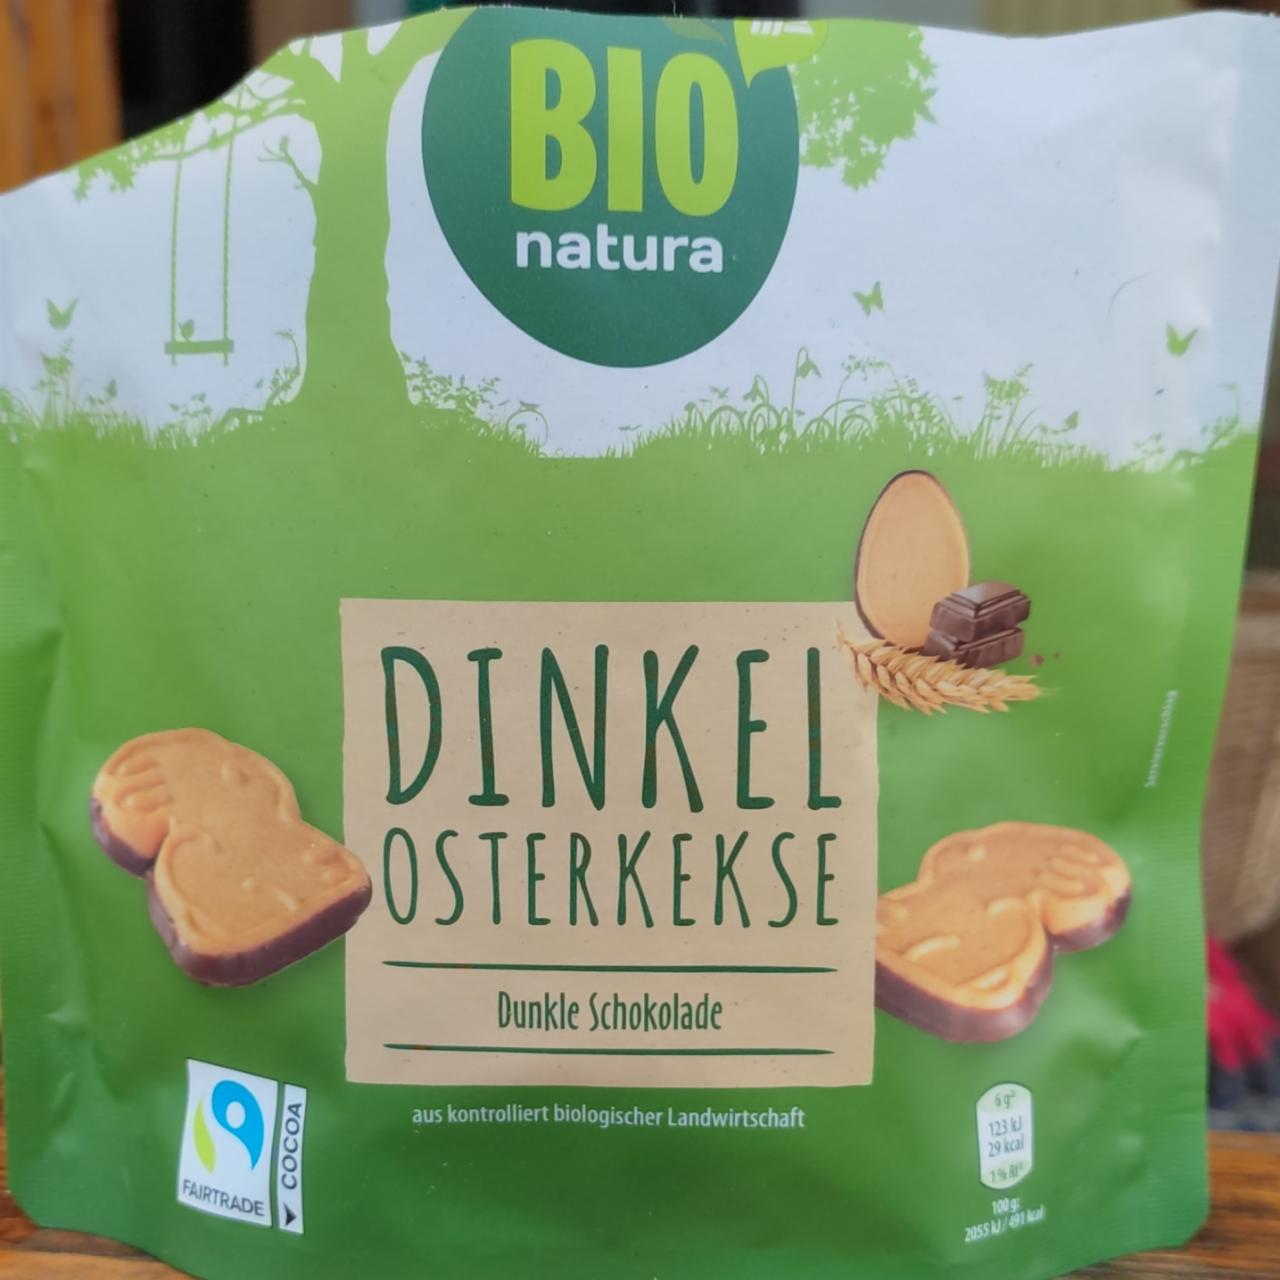 Fotografie - Dinkel Osterkekse dunkle Schokolade Bio natura